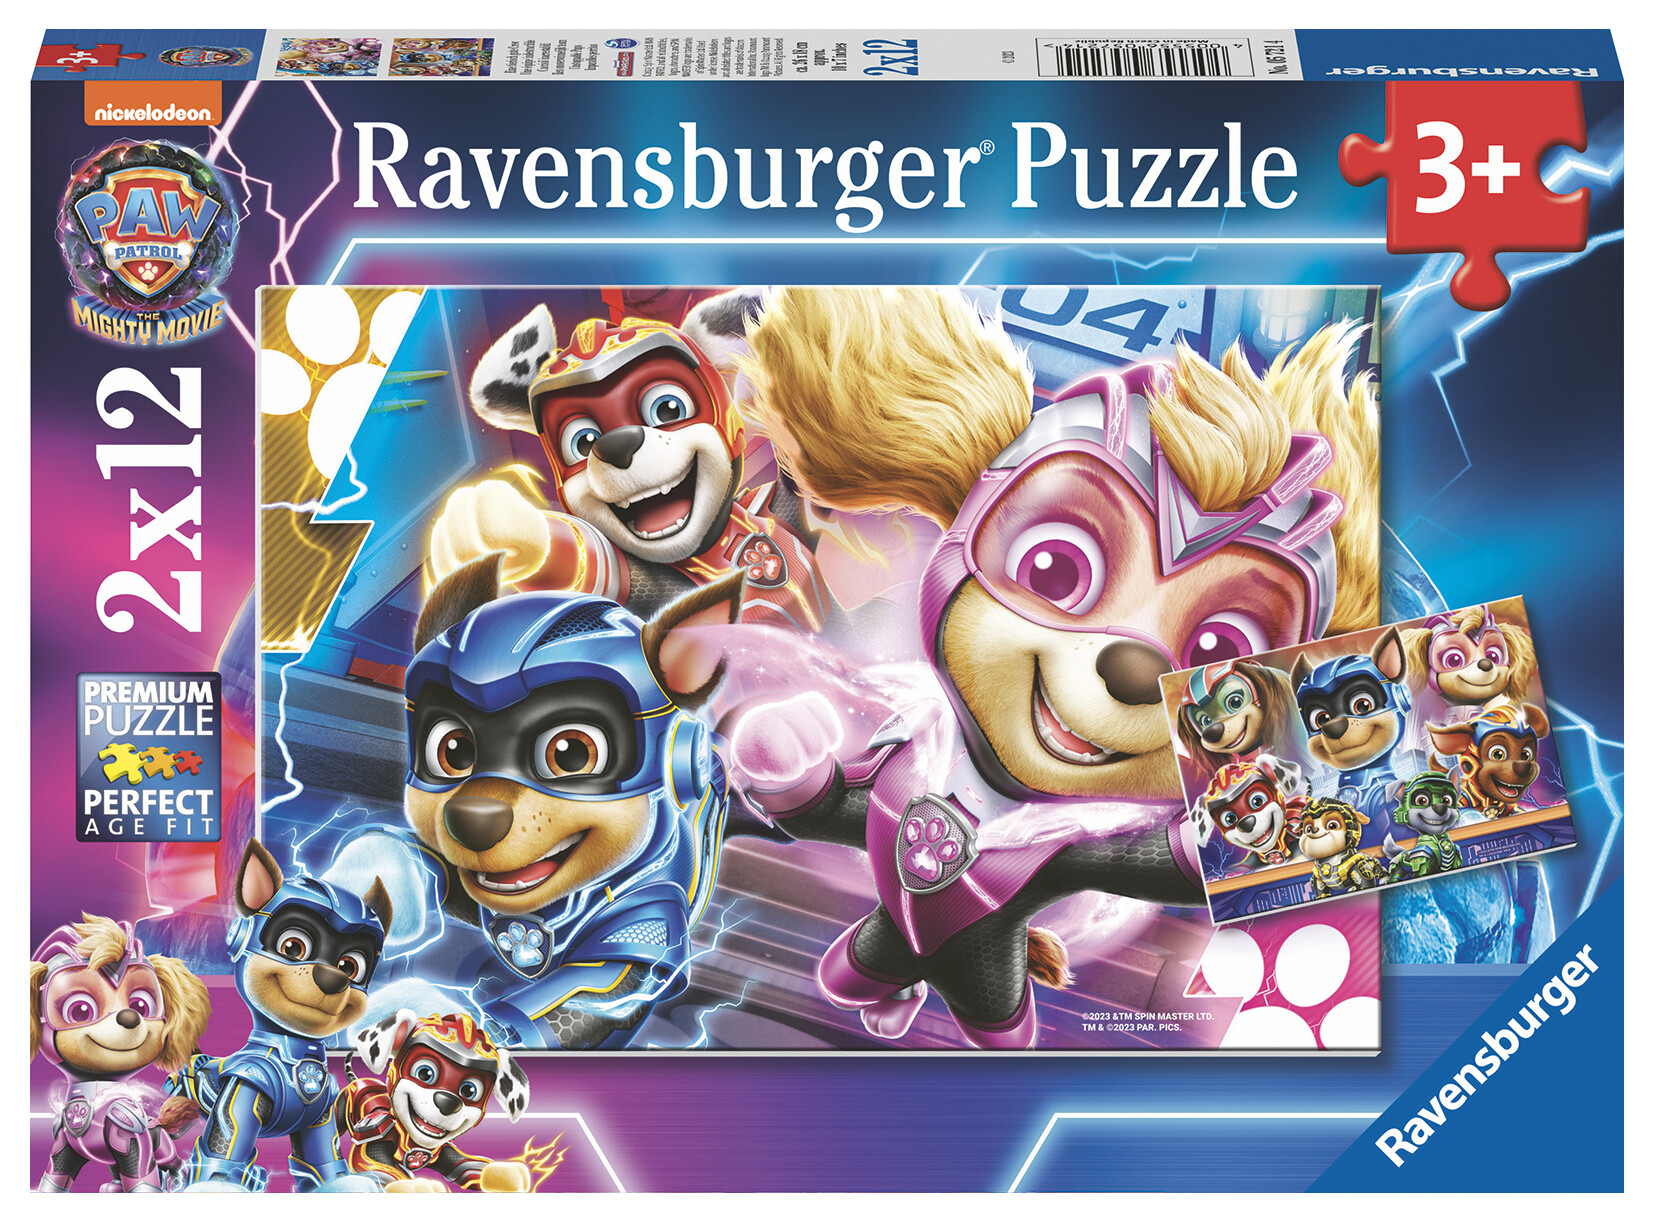 Ravensburger - puzzle paw patrol, the mighty movie, collezione 2x12, 2 puzzle da 12 pezzi, età raccomandata 3+ anni - RAVENSBURGER, Paw Patrol